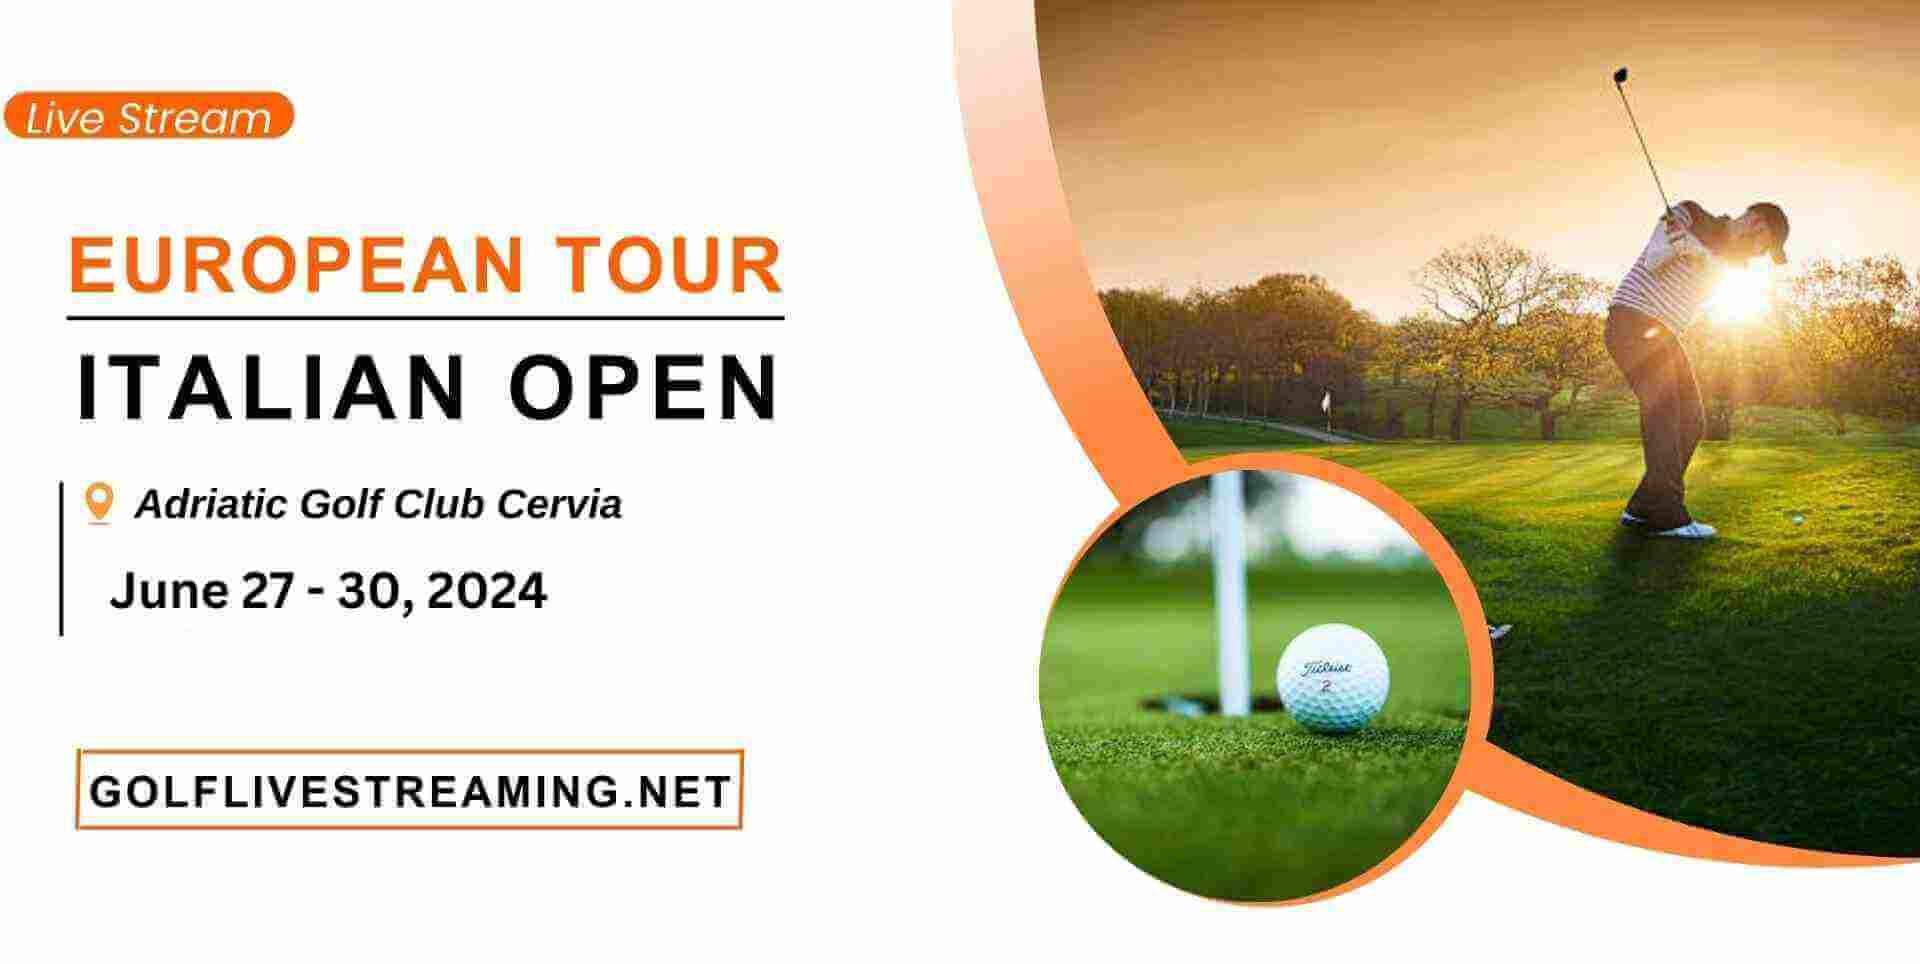 Italian Open 2016 Golf Live Streaming